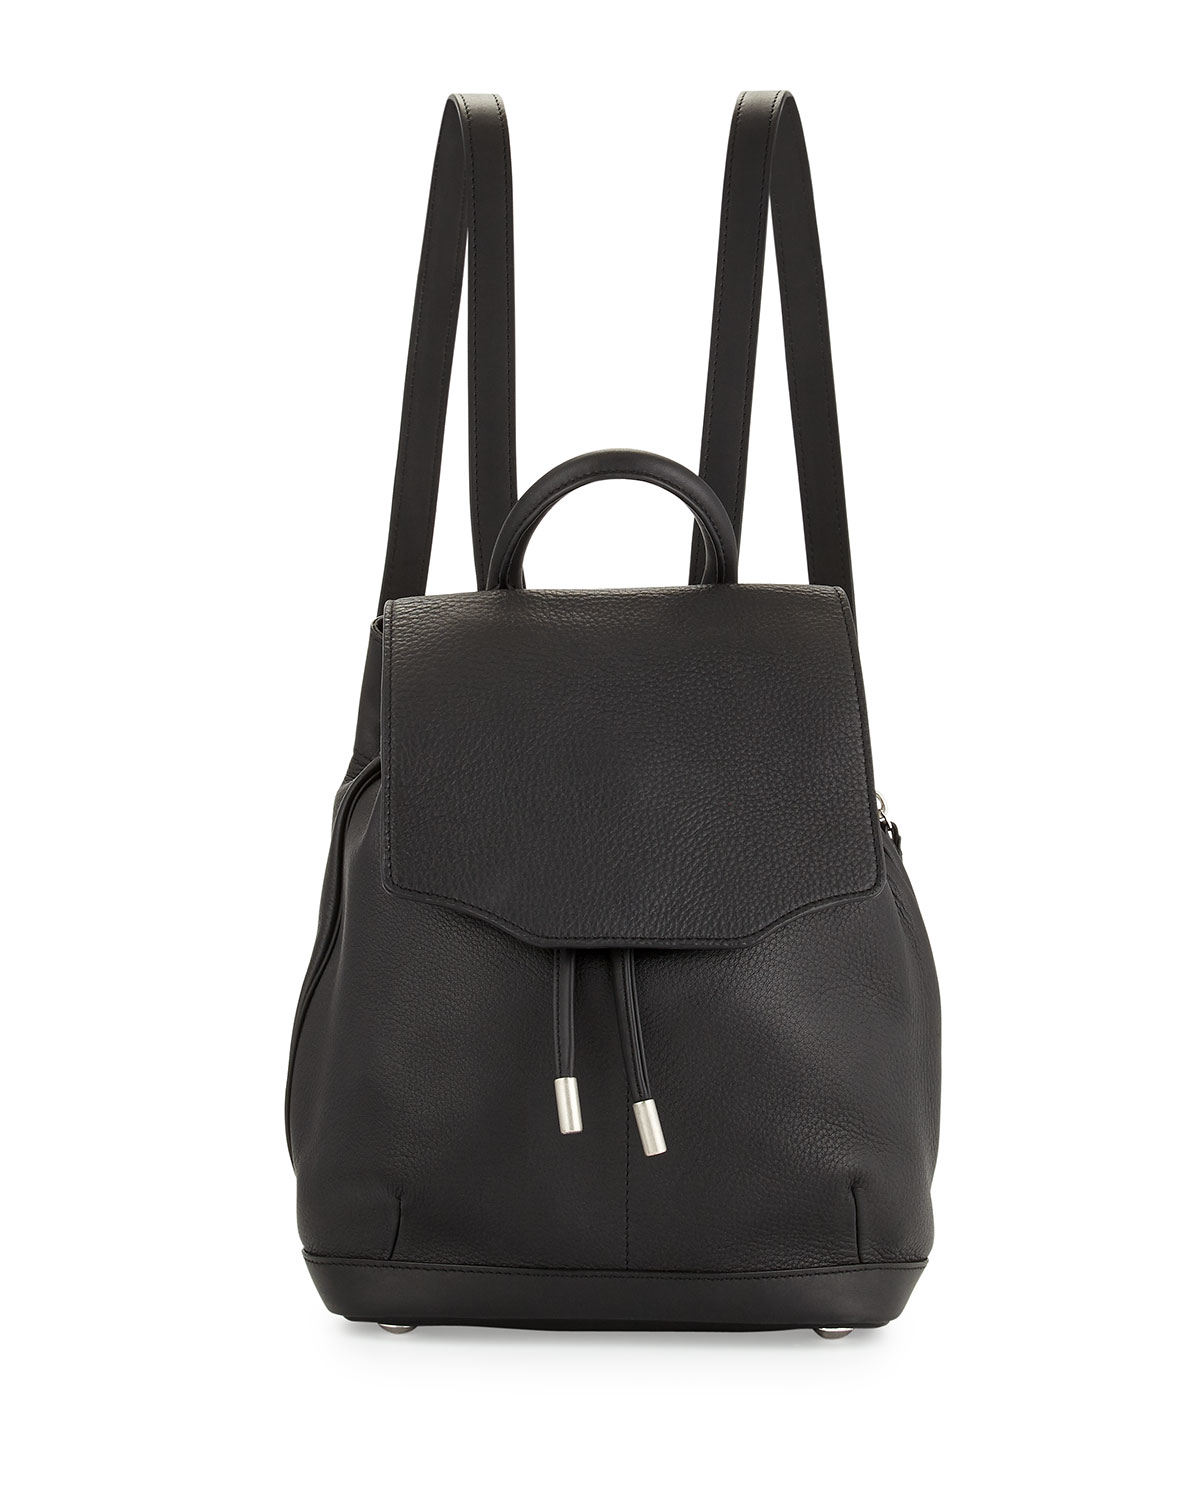 Rag & Bone Pilot Mini Leather Backpack in Black - Lyst